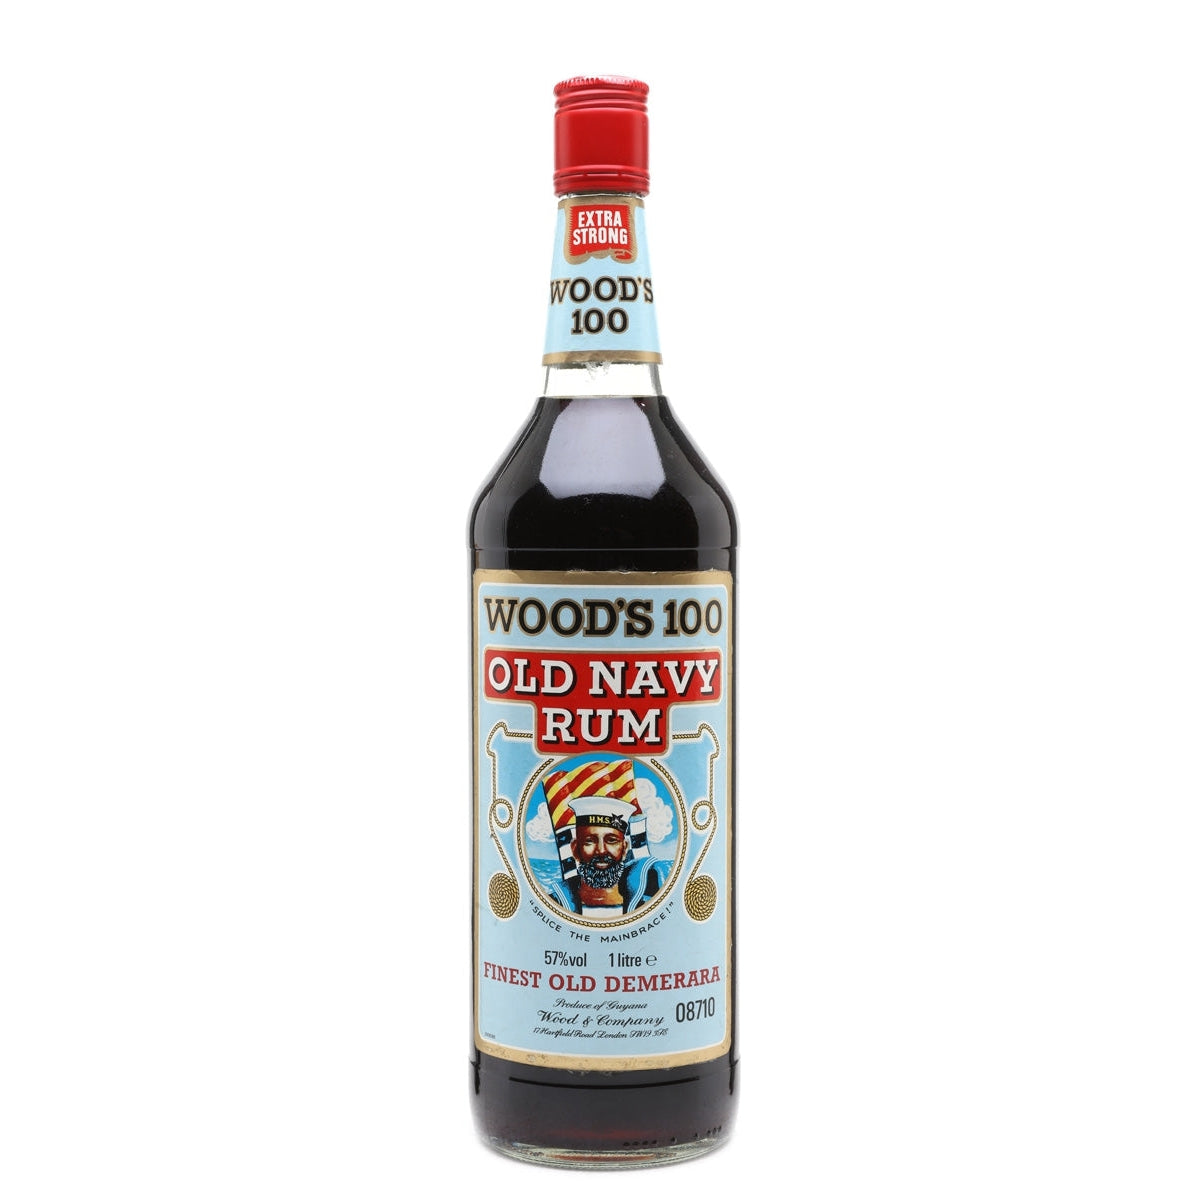 WOOD'S 100 Old Navy Rum 57% Vol. 1l